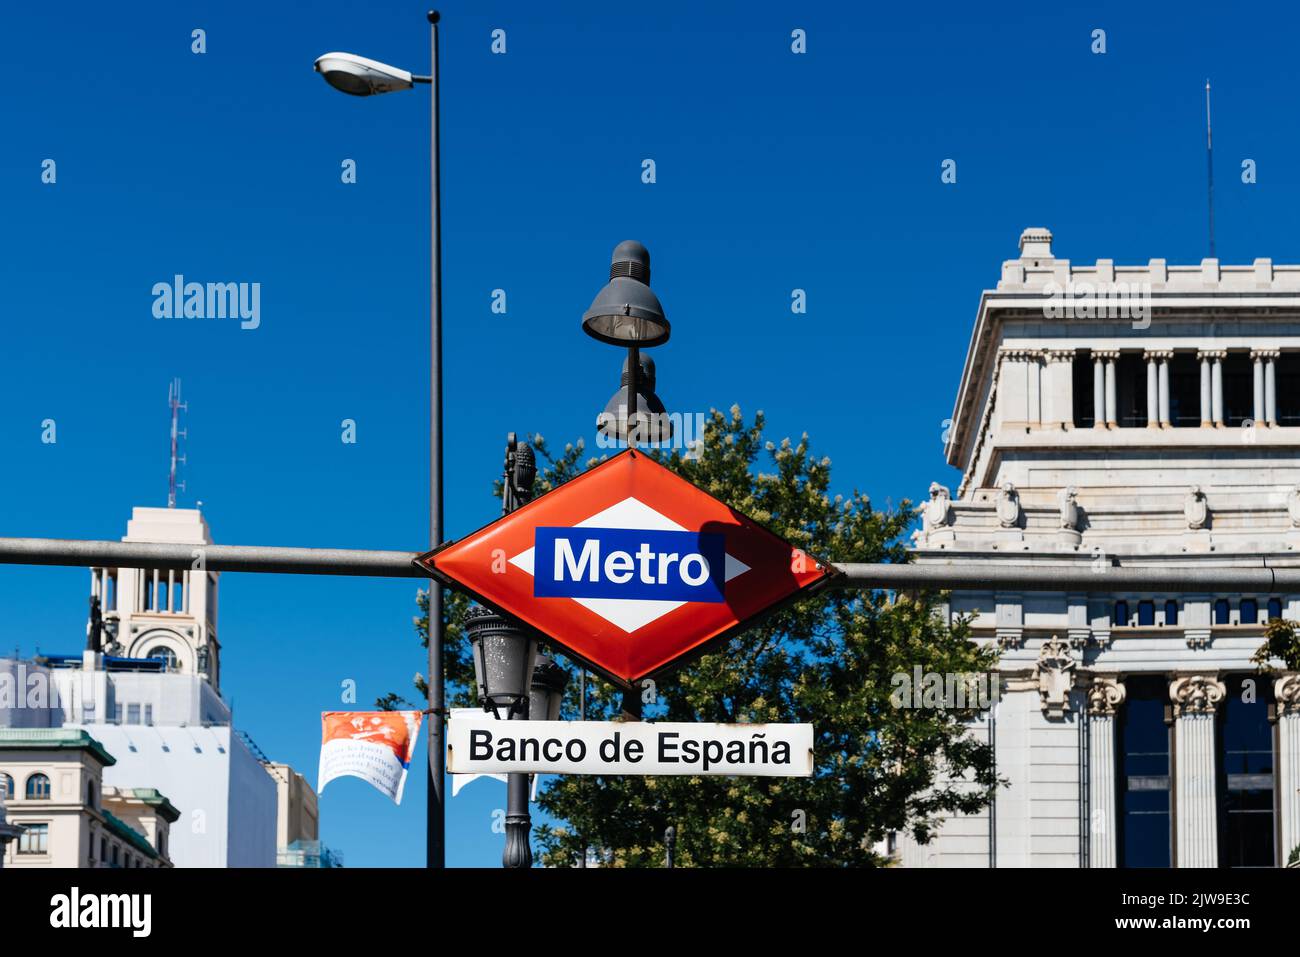 Madrid, Spain - August 15, 2021: Banco de Espana, Bank of Spain, metro station sign Stock Photo